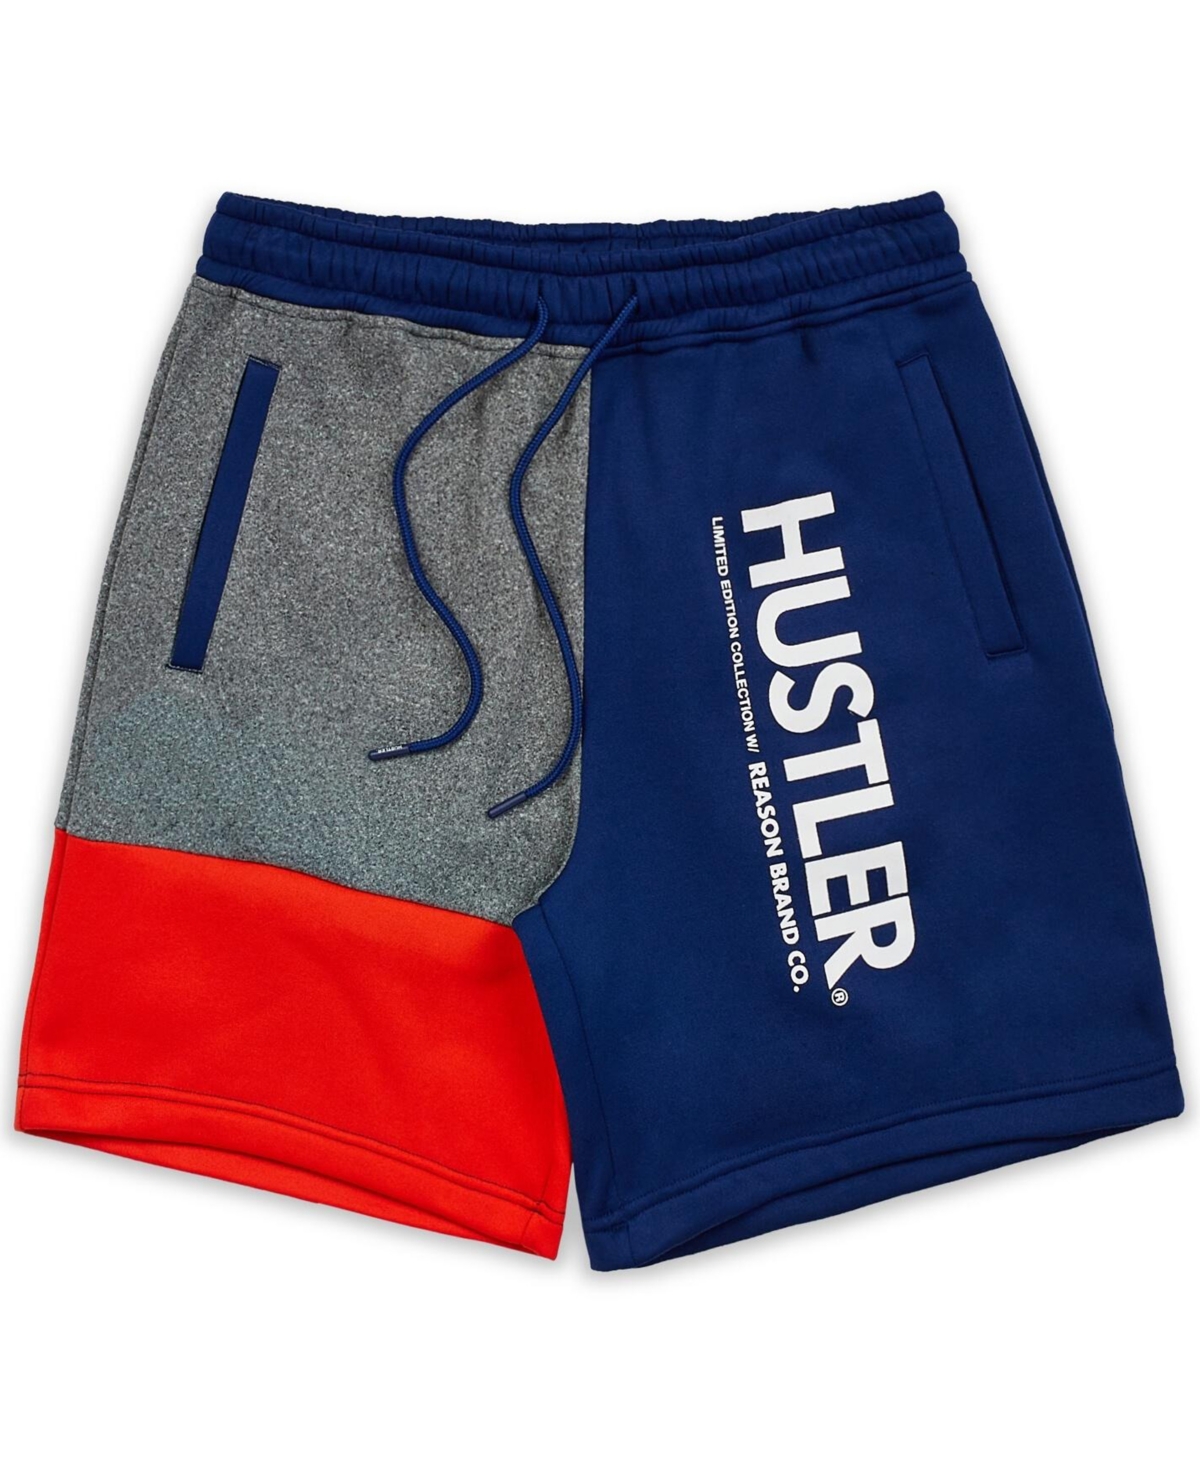 Men's Hustler Color Block Shorts - Multi